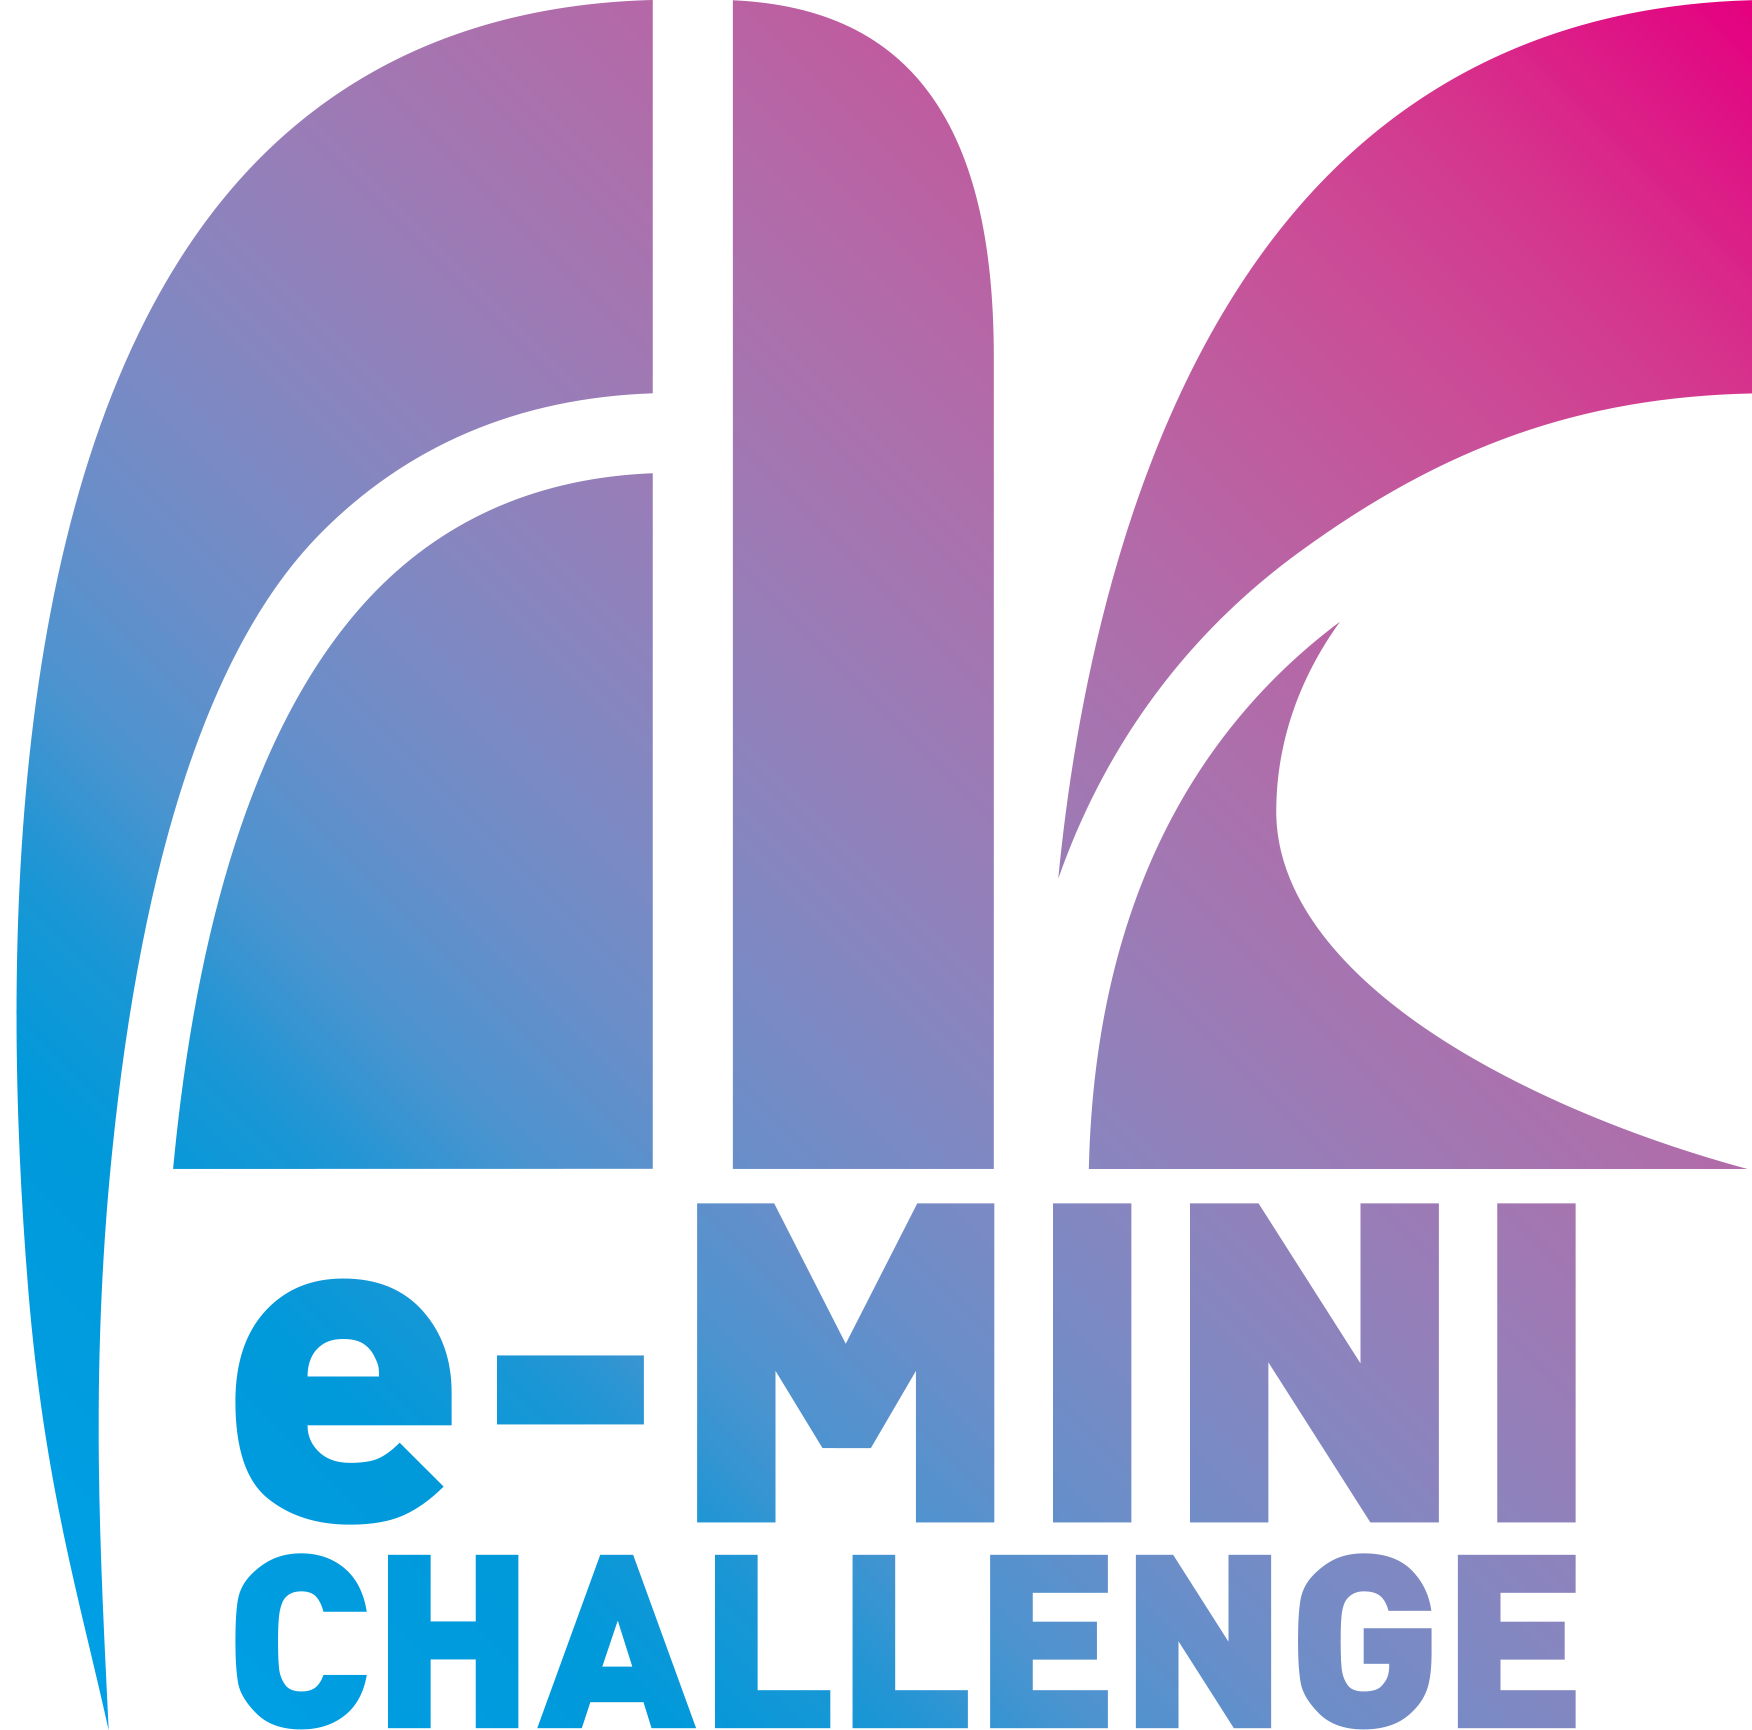 e-MINI CHALLENGE®2022 S2 Rd.6 ポイントランキング公開